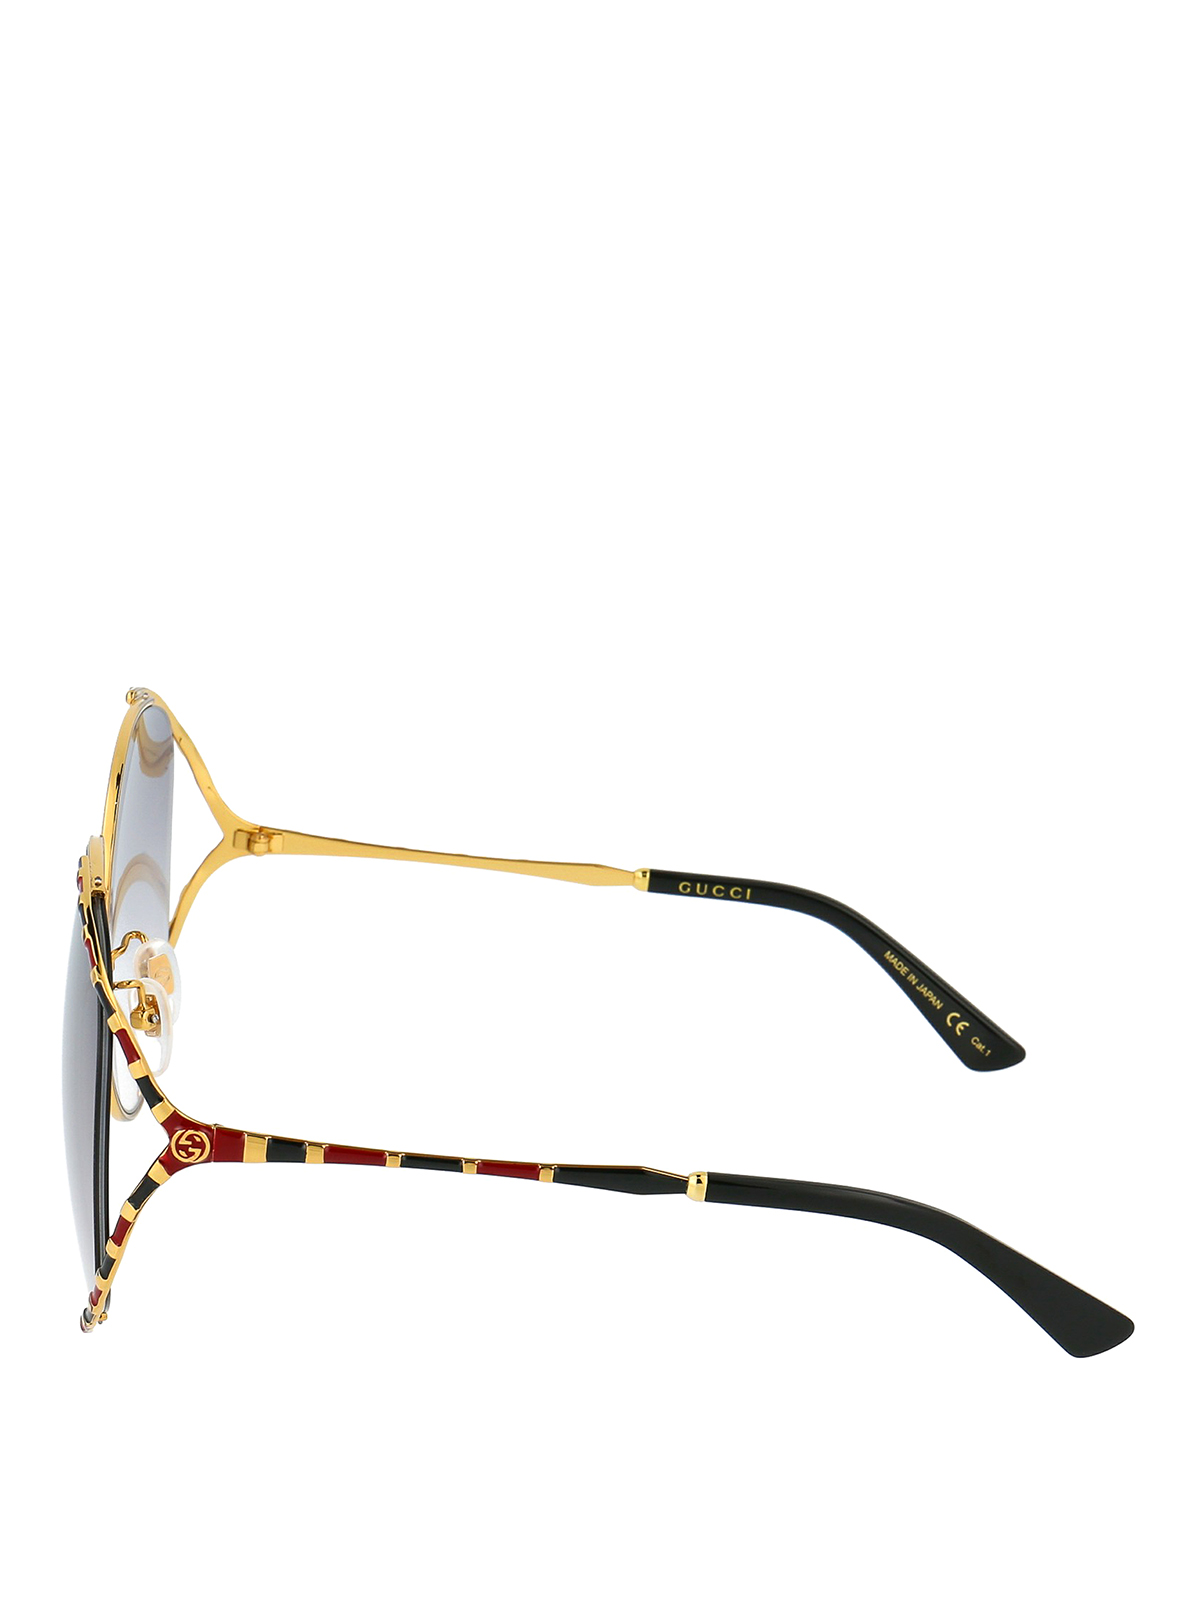 gucci shades online